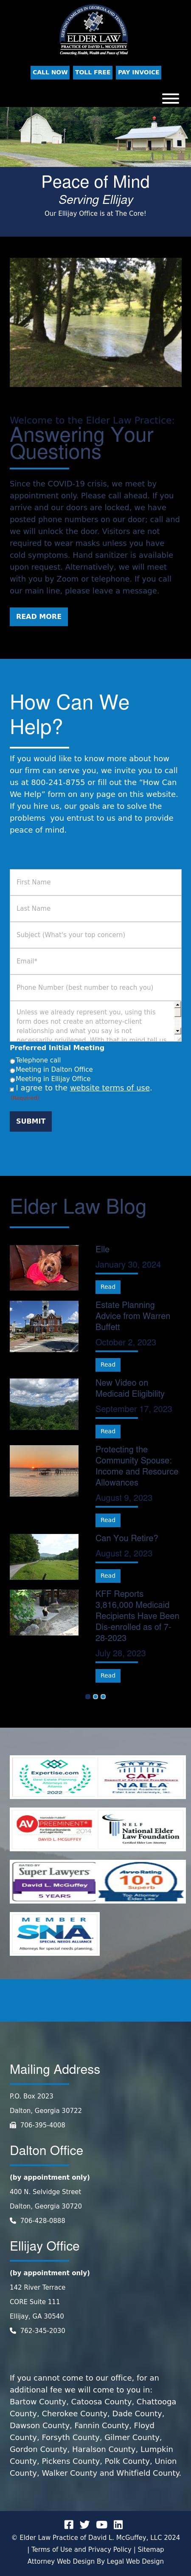 Elder Law Practice of David L. McGuffey - Dalton GA Lawyers